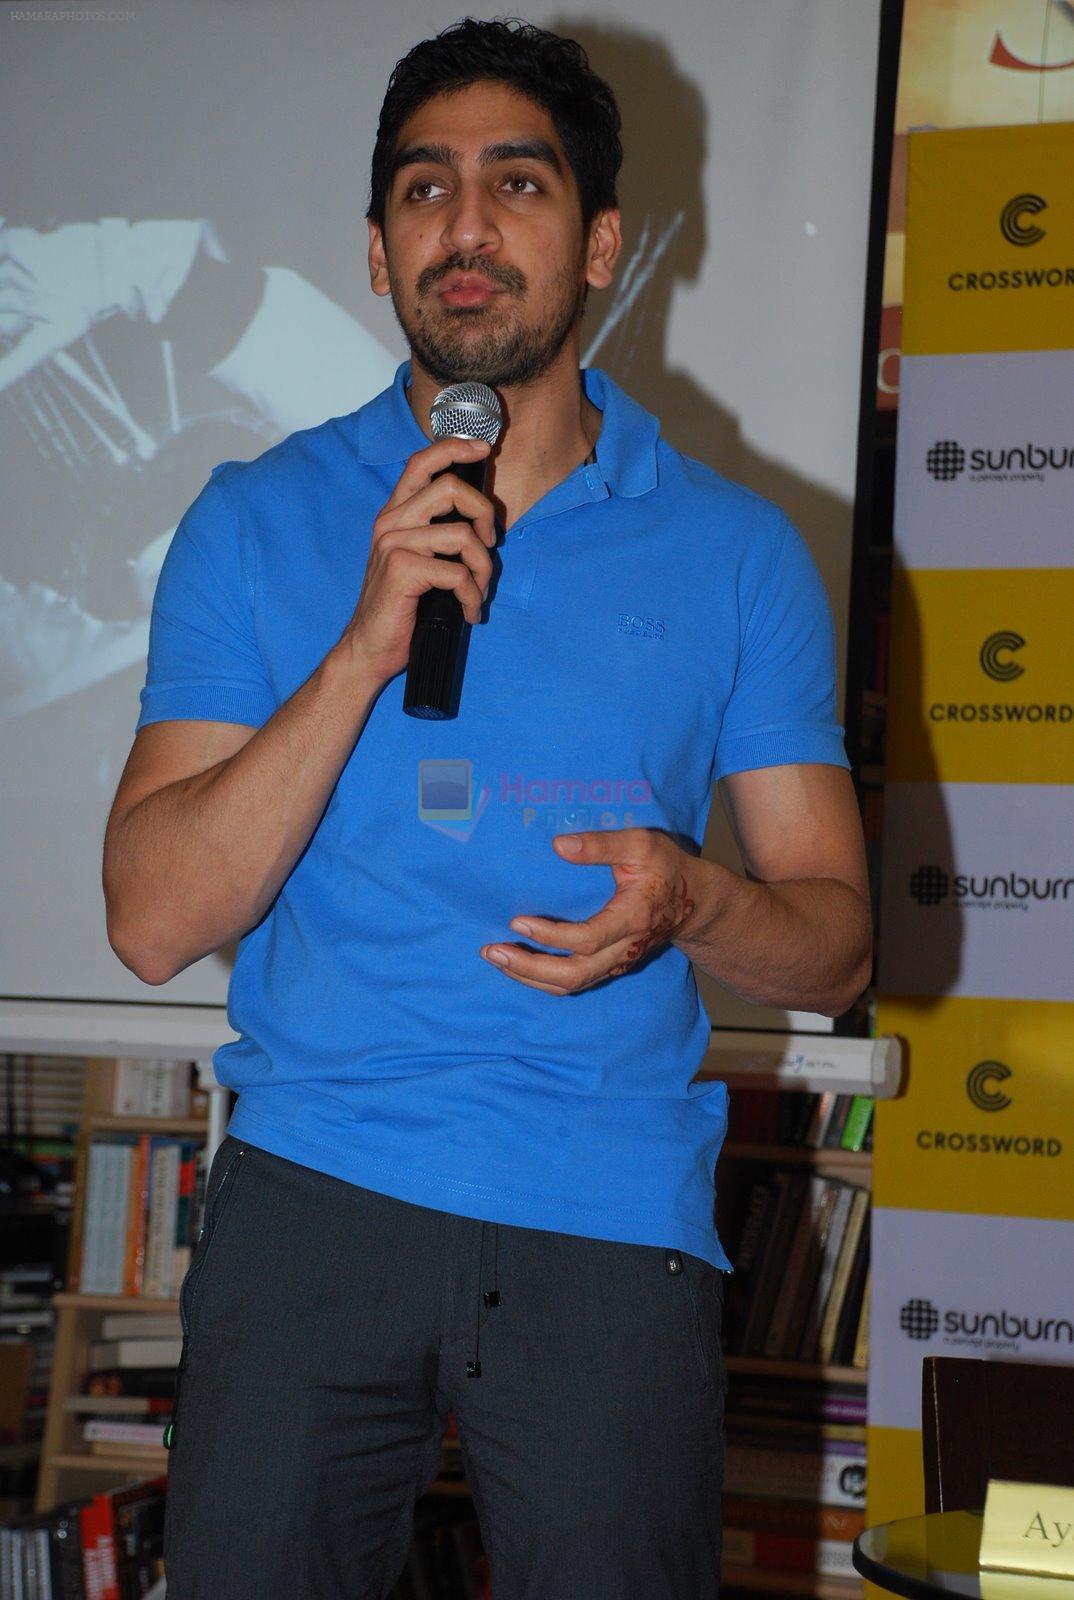 Ayan Mukerji at the True Story og Sunburn book launch in Crossword, Mumbai on 22nd Dec 2014